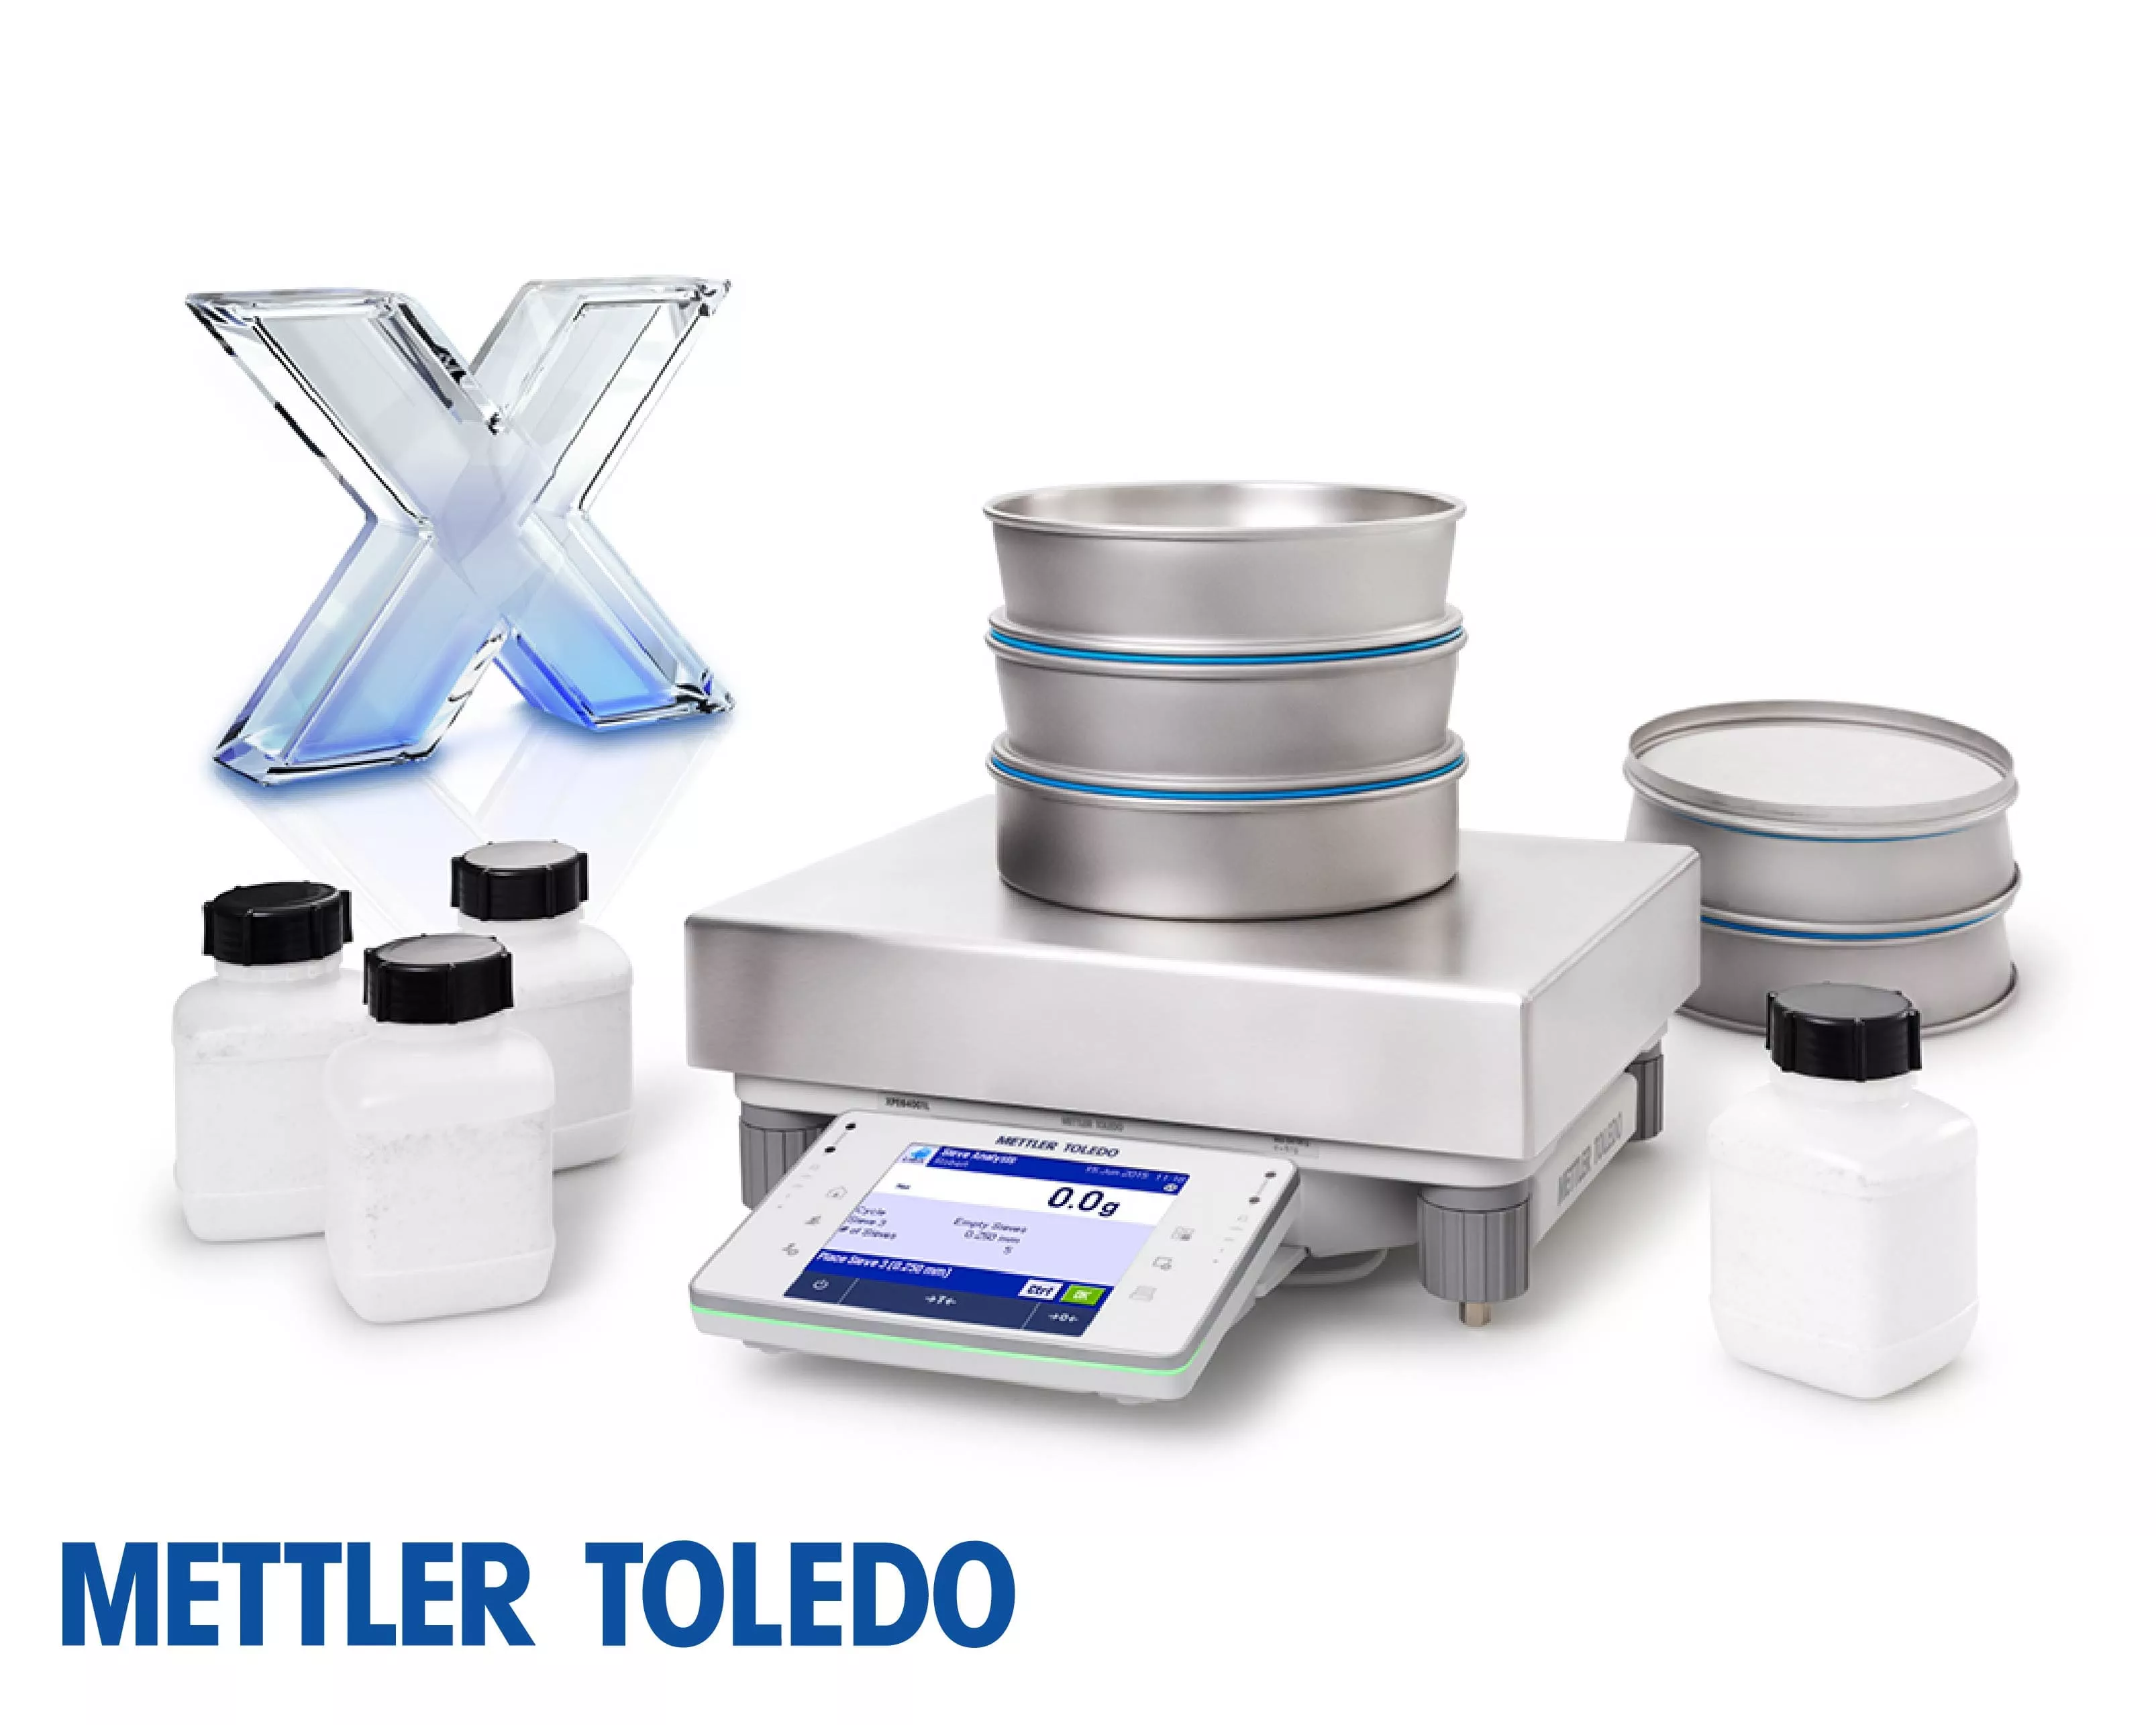 Mettler Toledo LabX Software for Laboratory